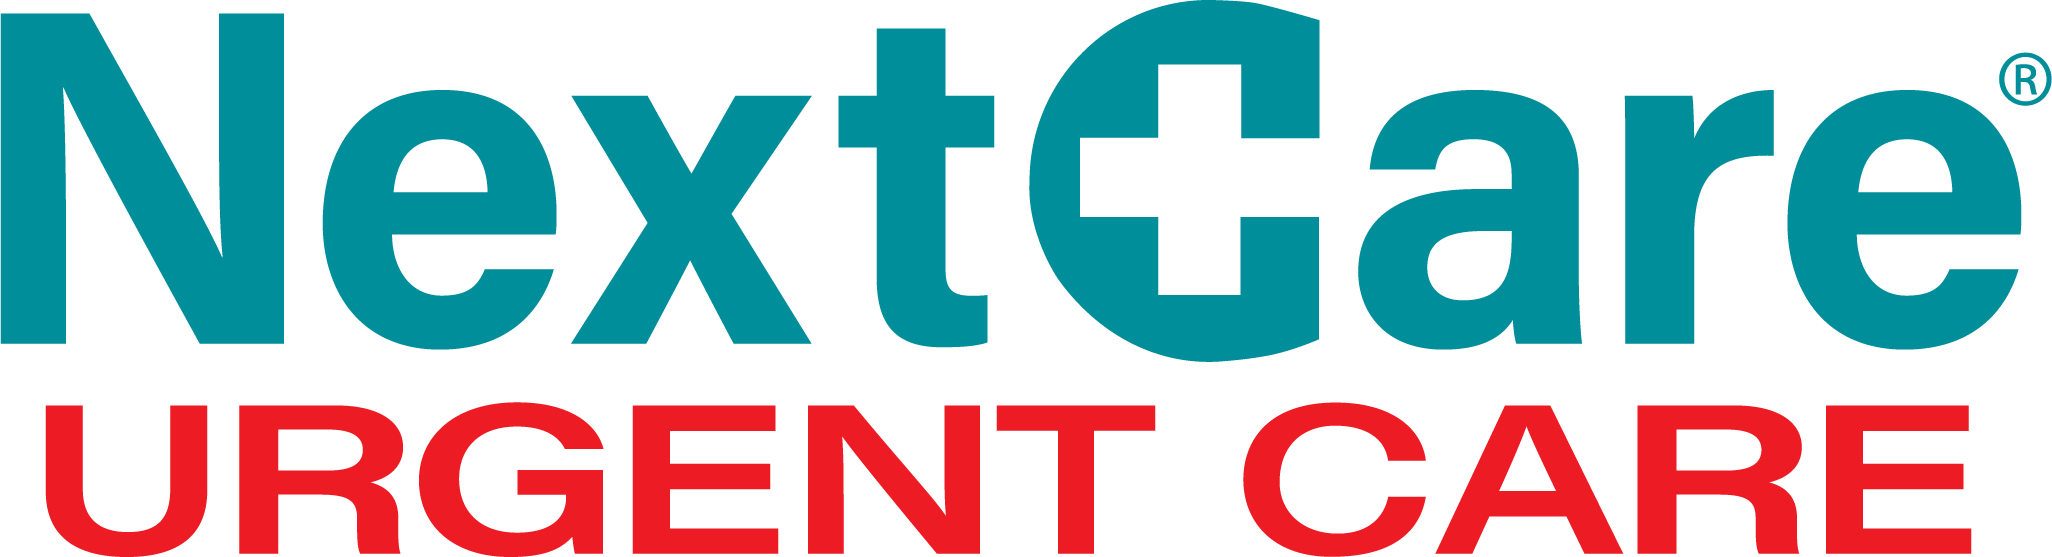 NextCare Urgent Care - Lee's Summit Logo